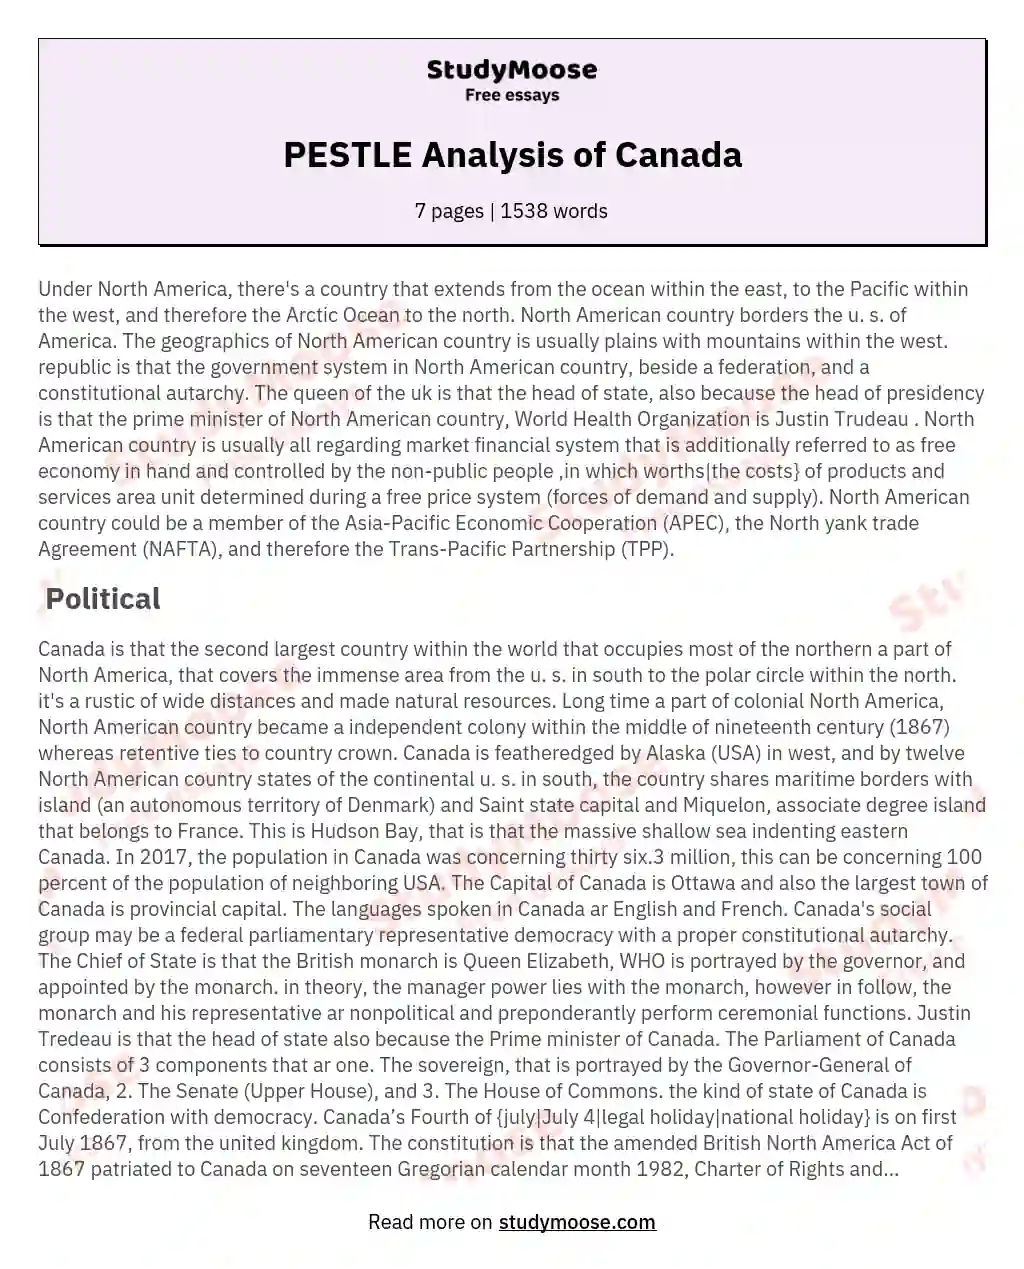 PESTLE Analysis of Canada essay